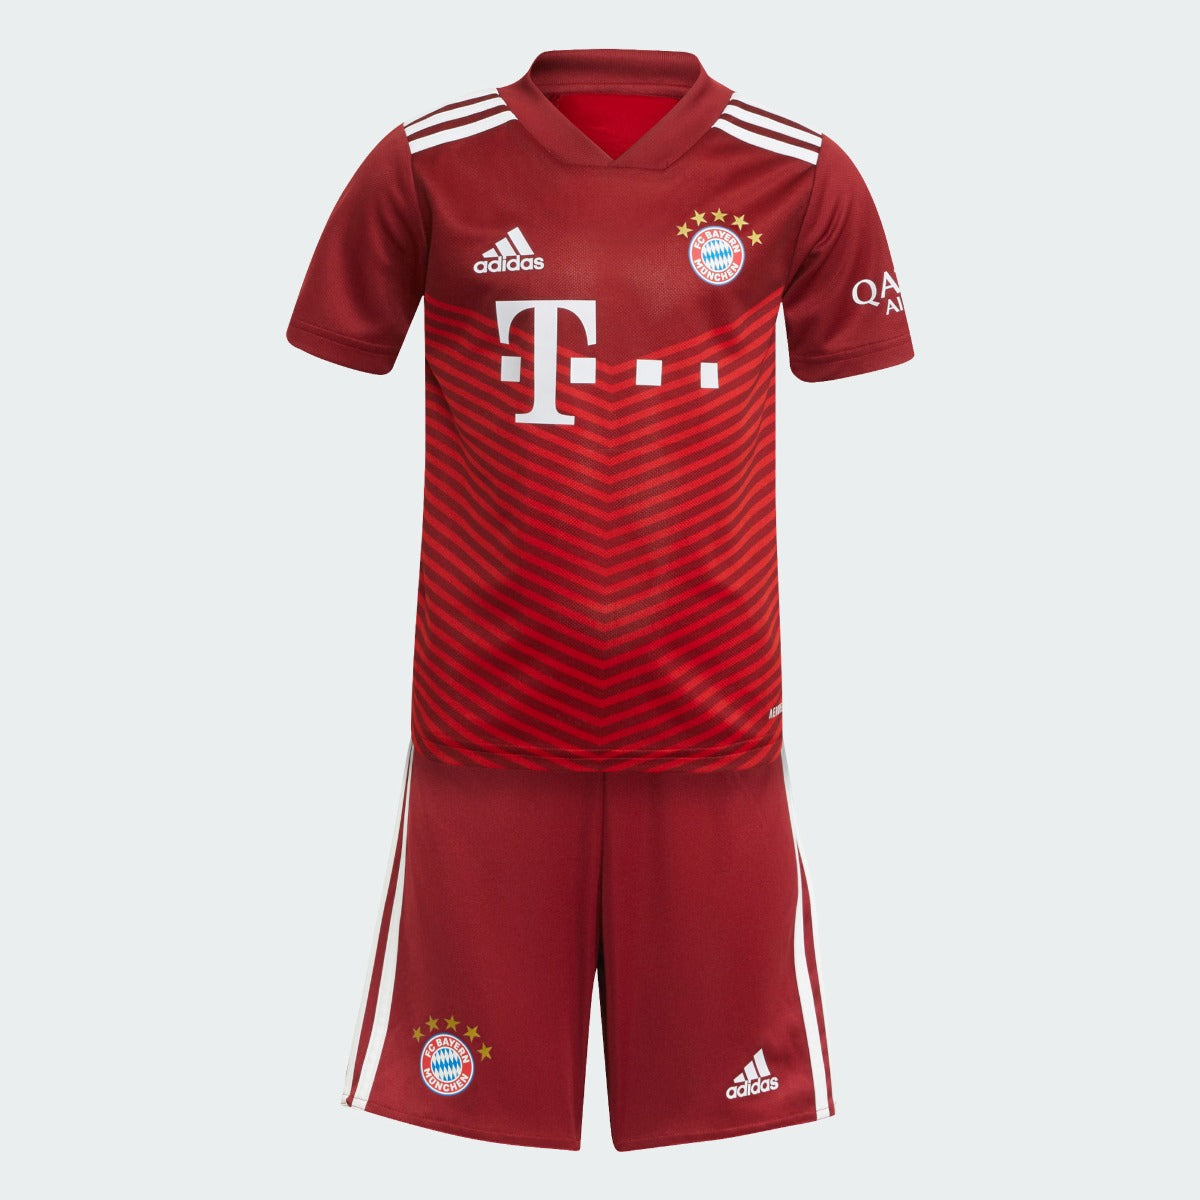 Adidas, Adidas 2021-22 Bayern Monaco Home MINI Kit - Rosso scuro